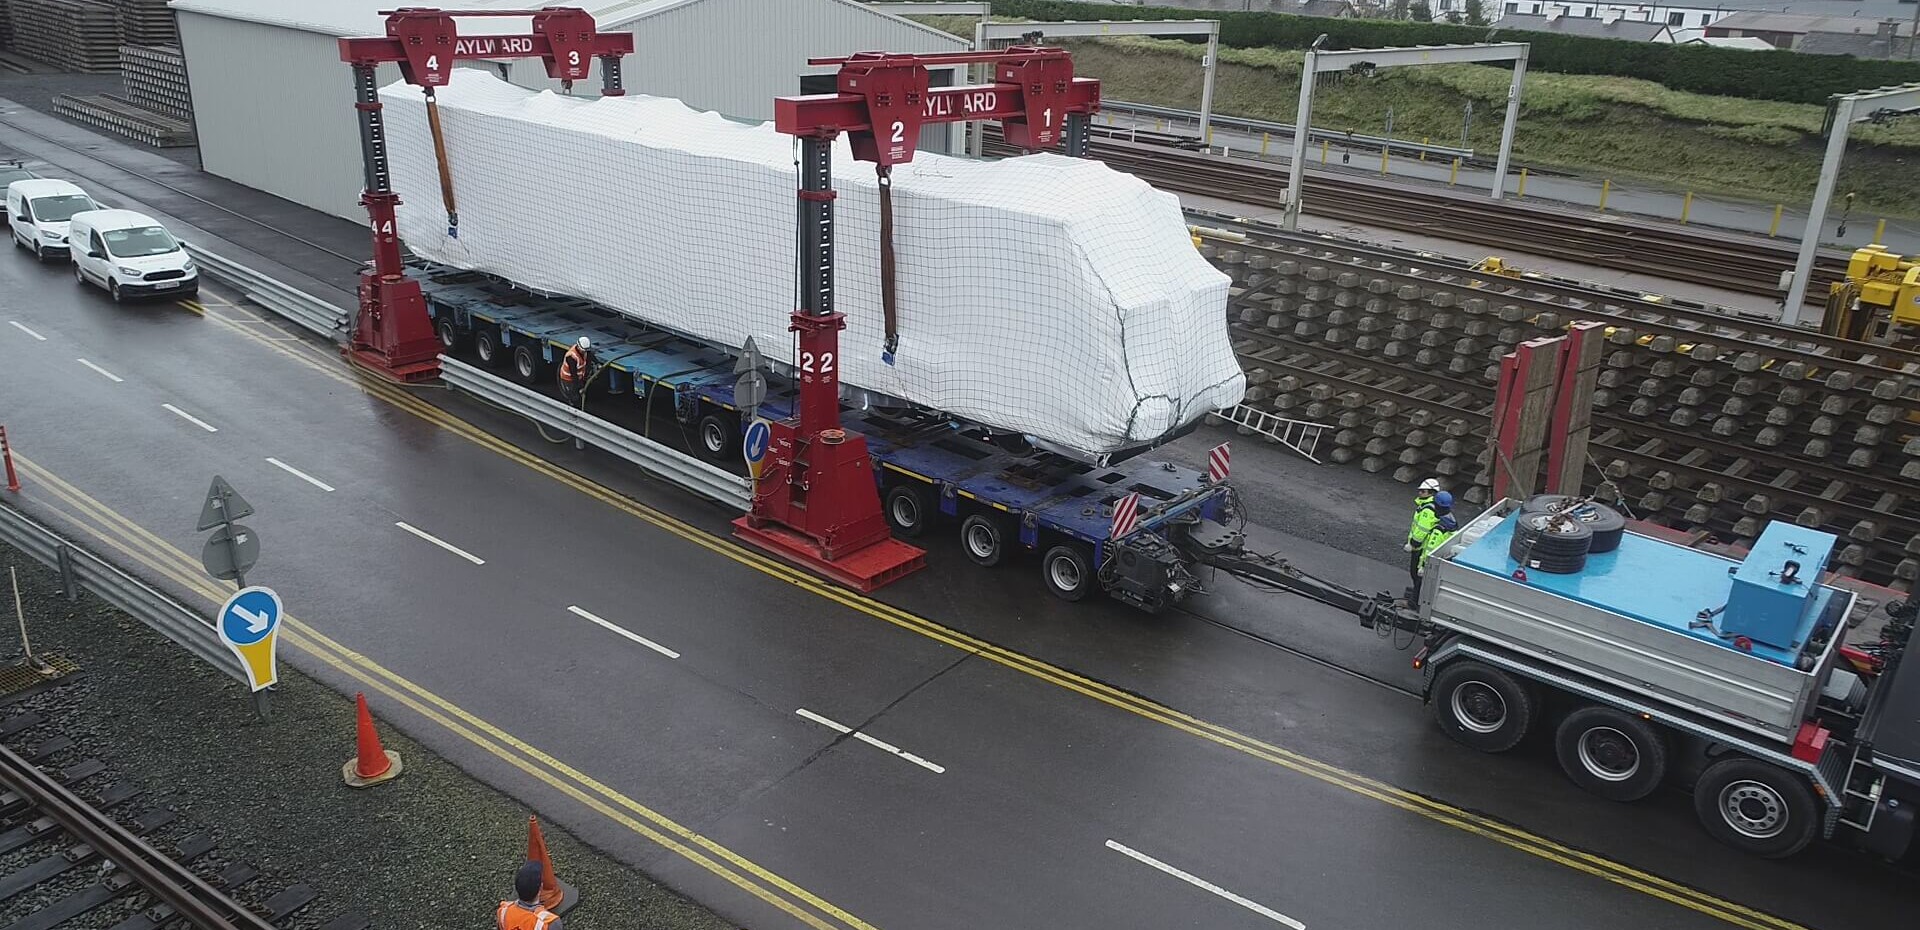 Machine arriving in Ireland February 2020